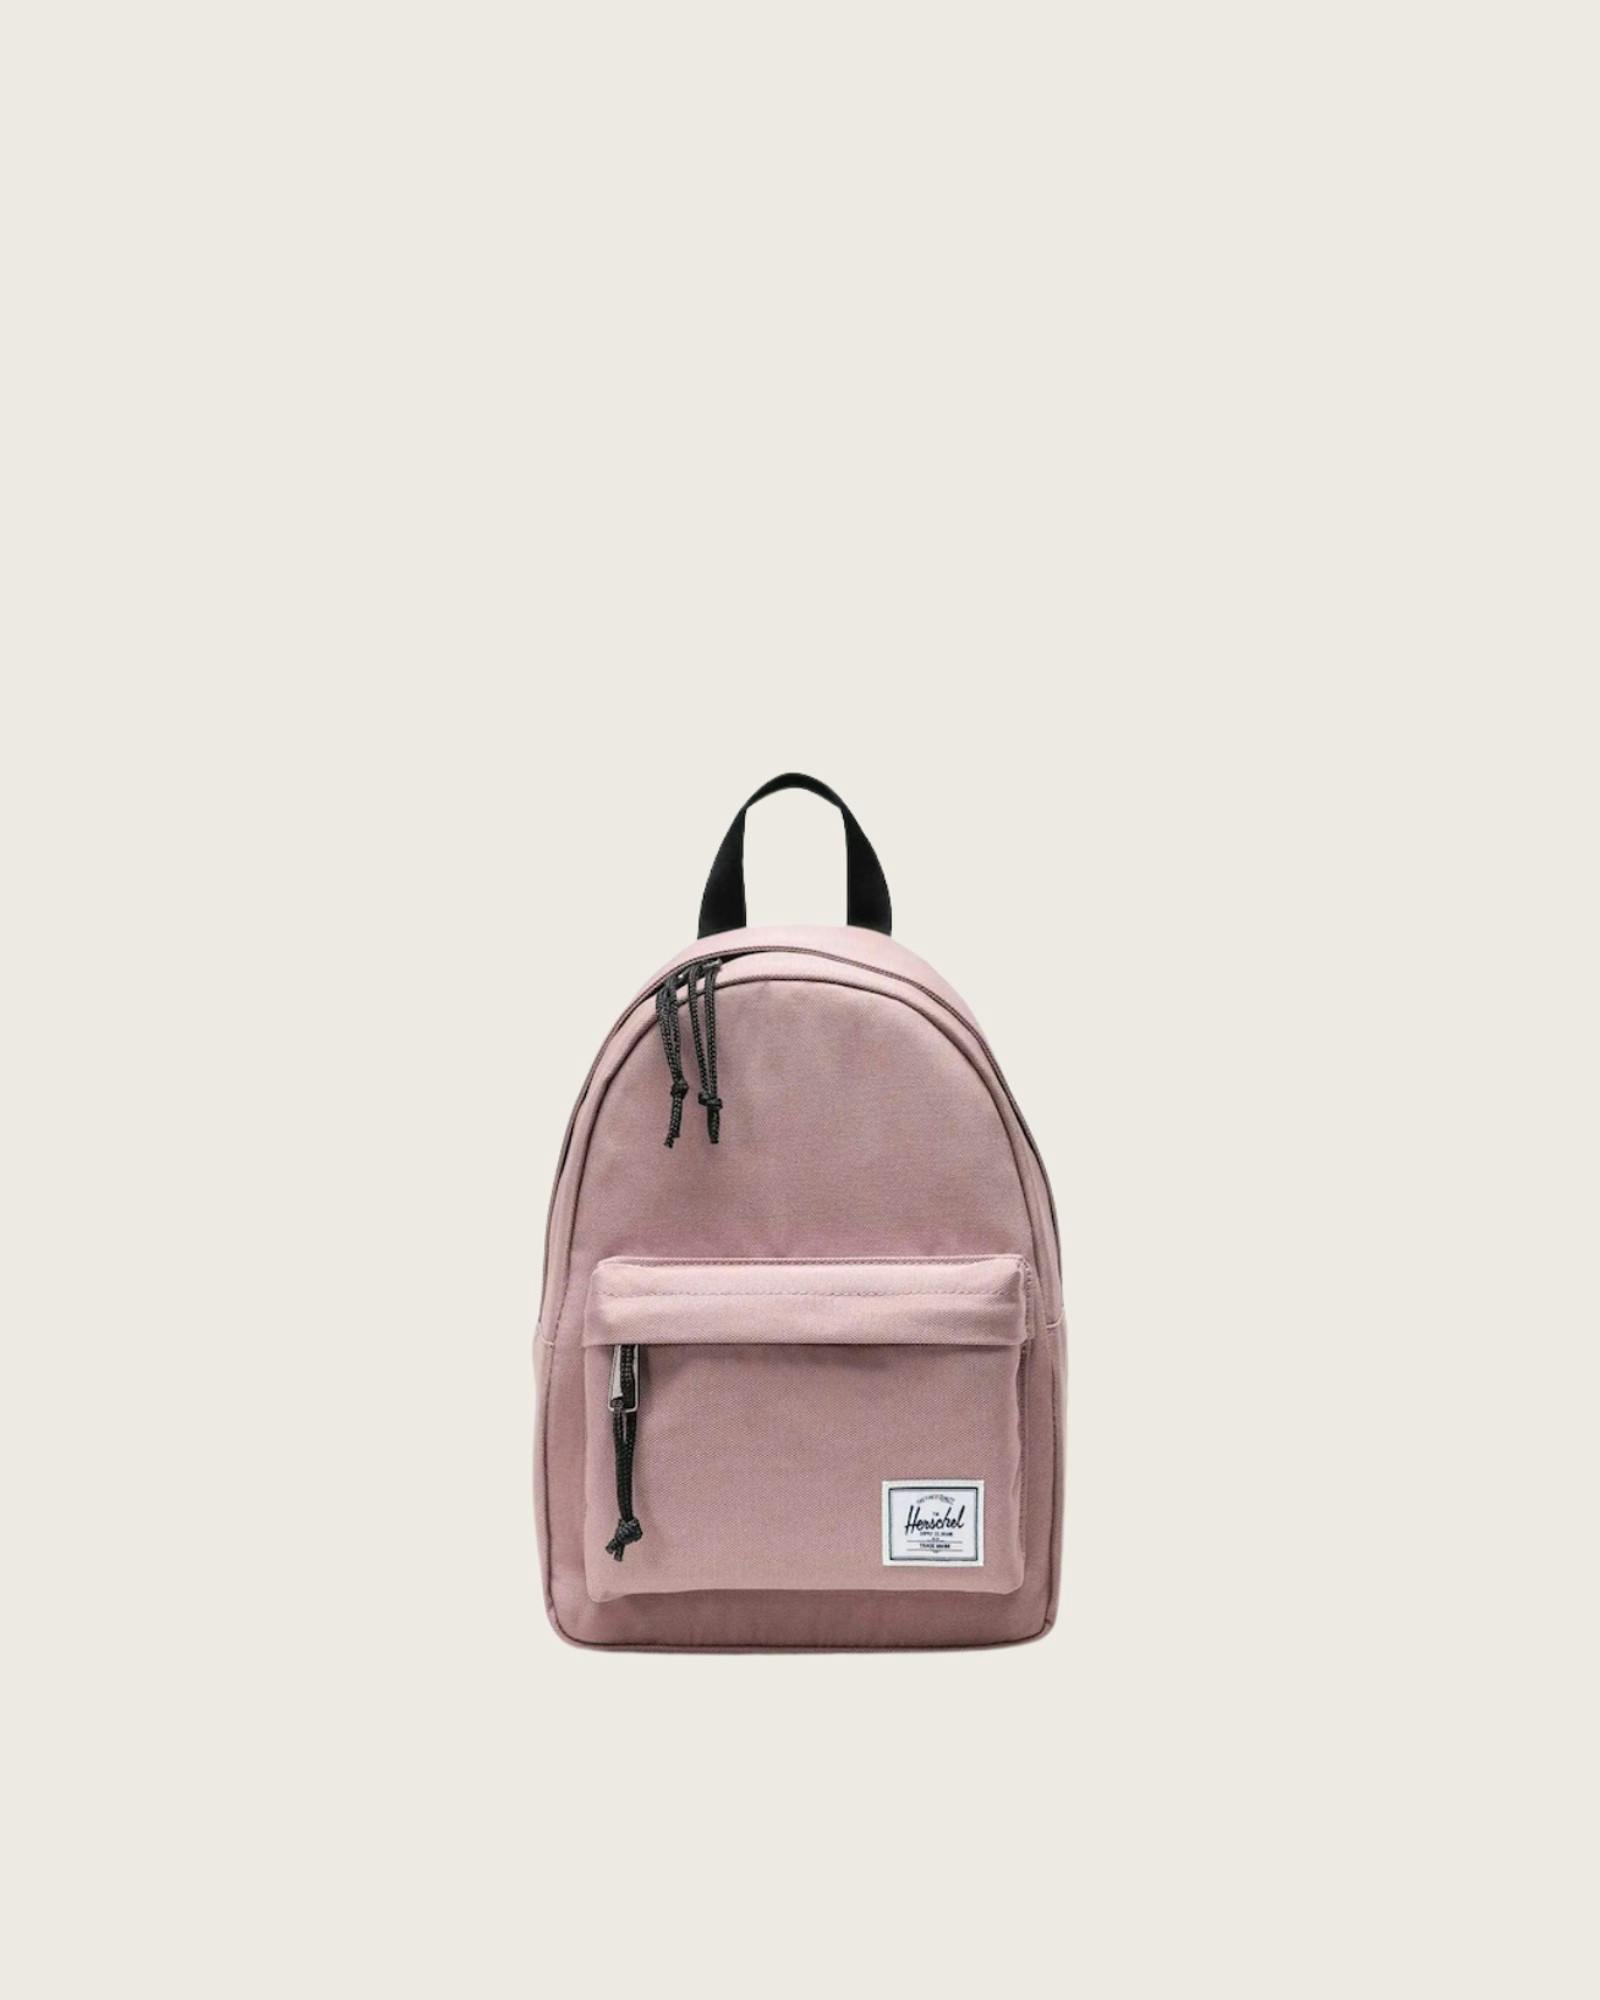 Herschel Classic Mini Backpack